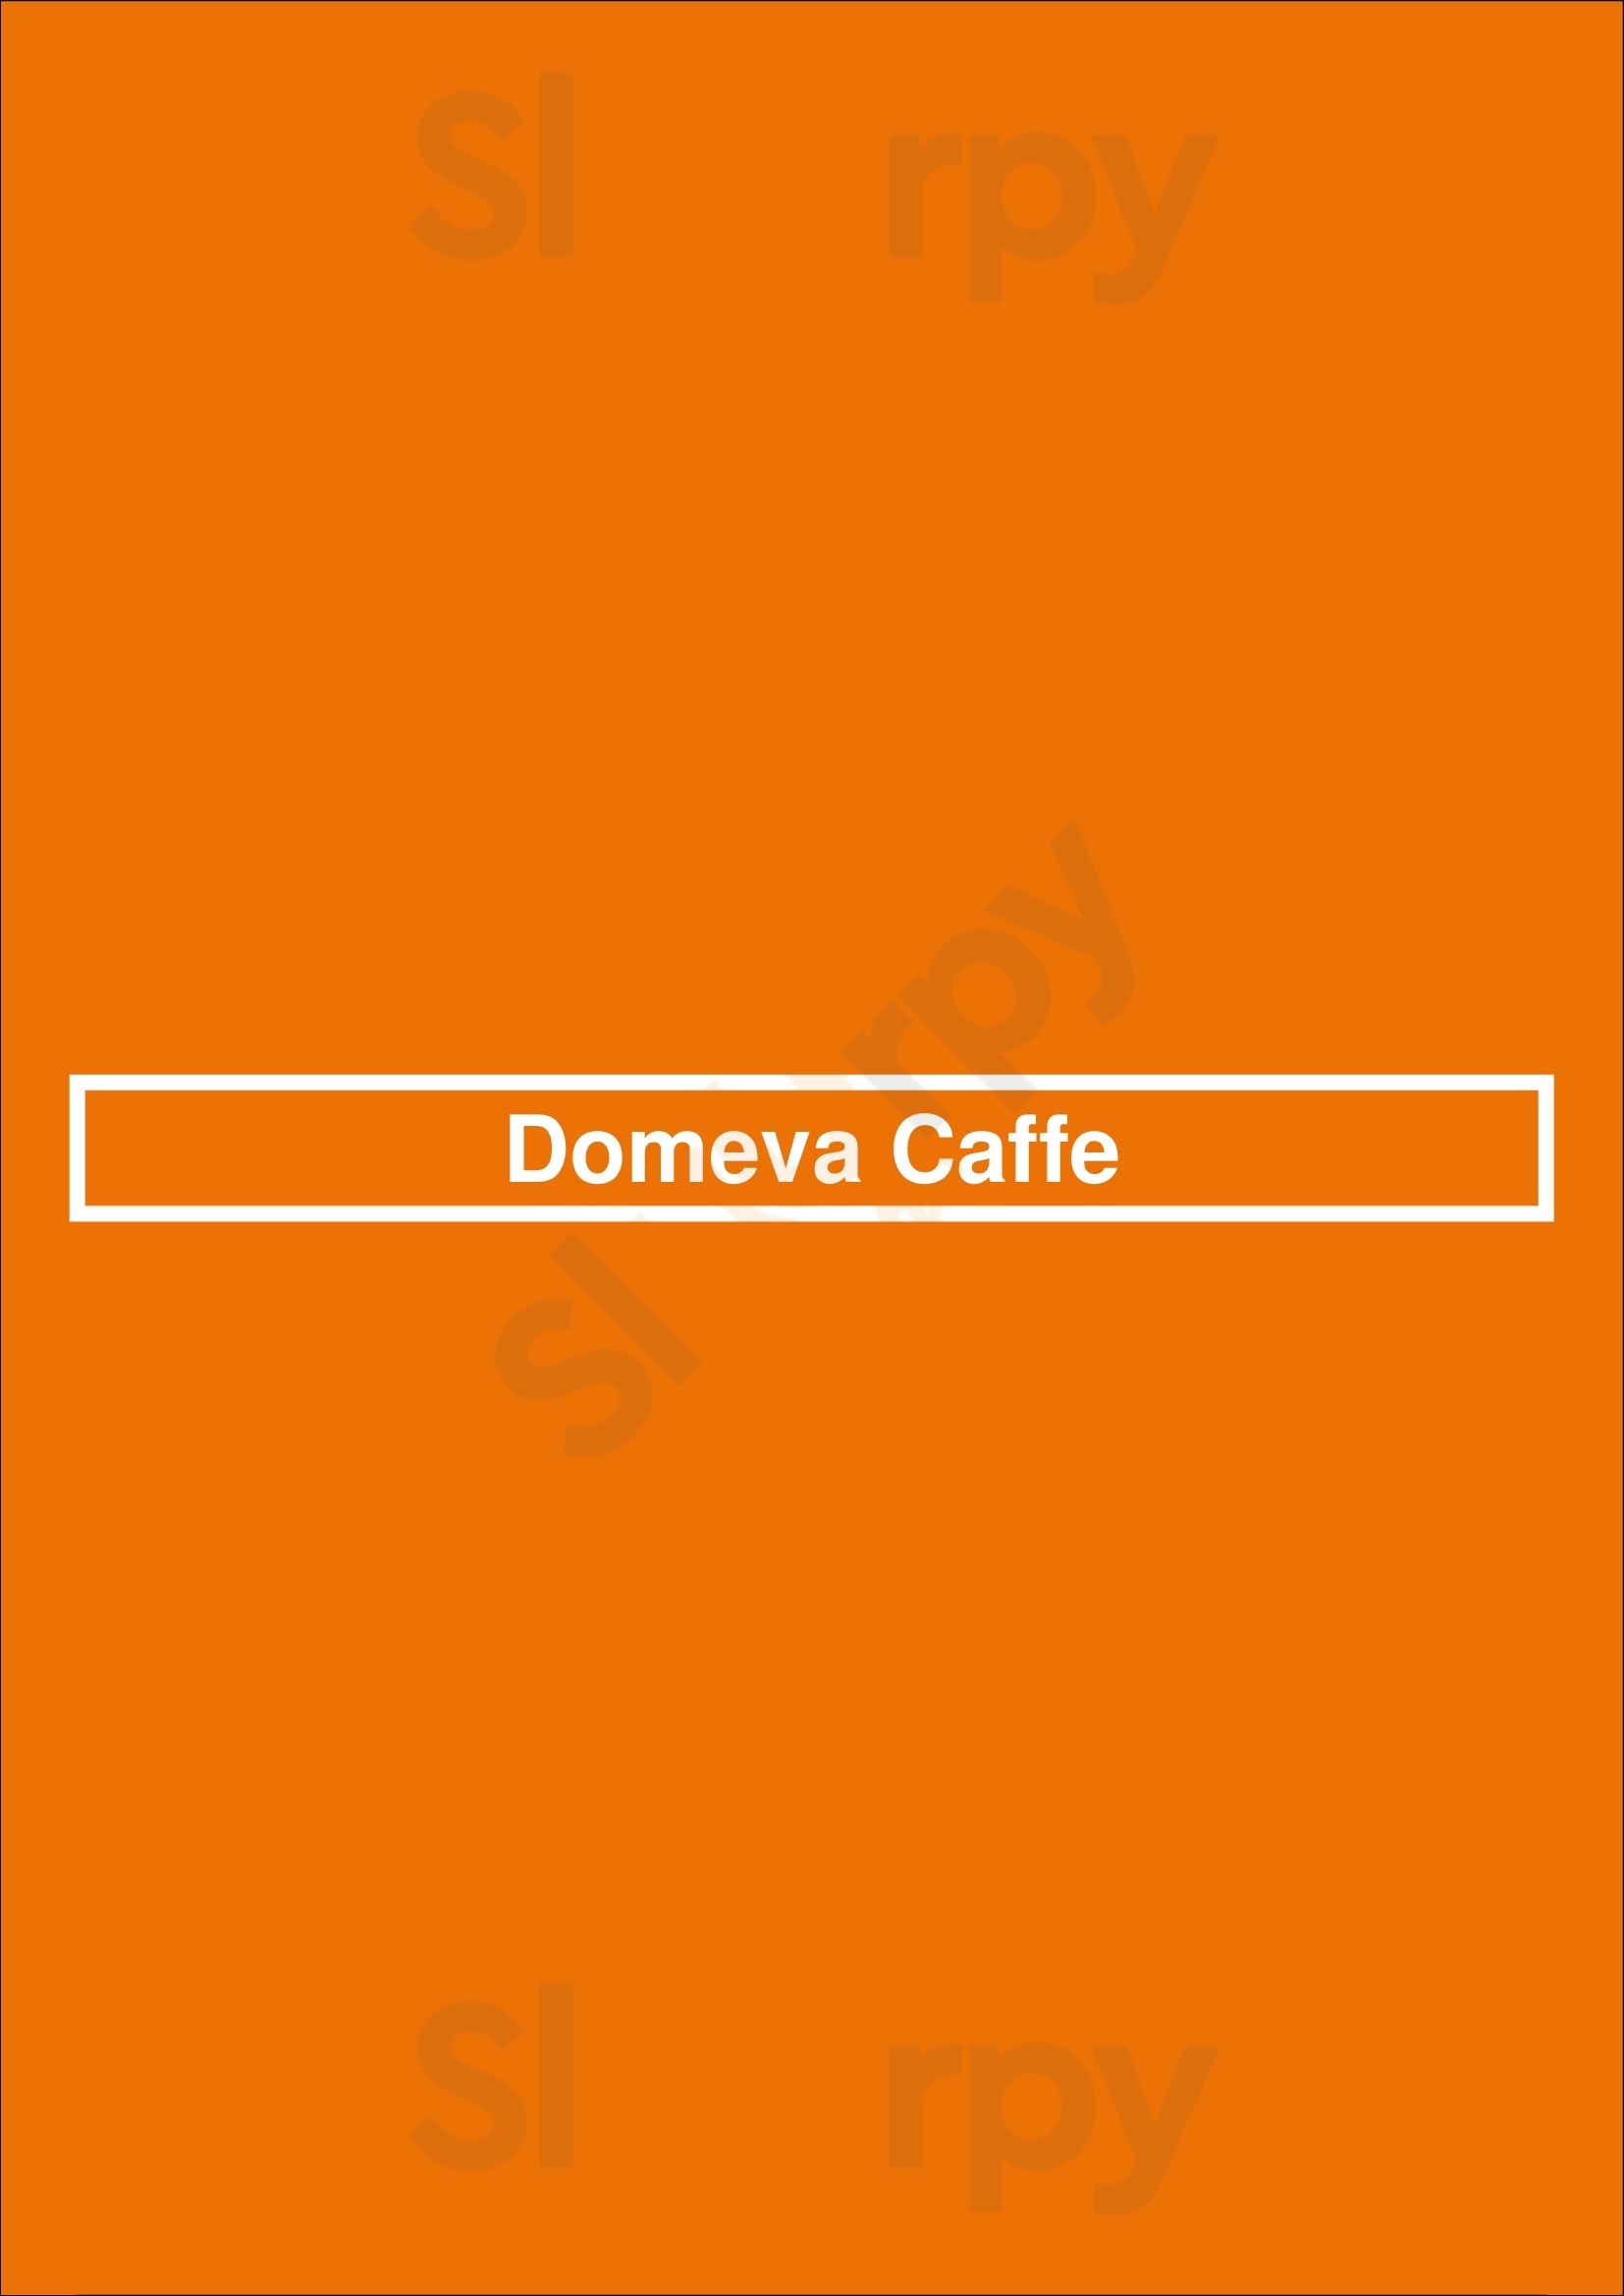 Domeva Caffe Lyon Menu - 1